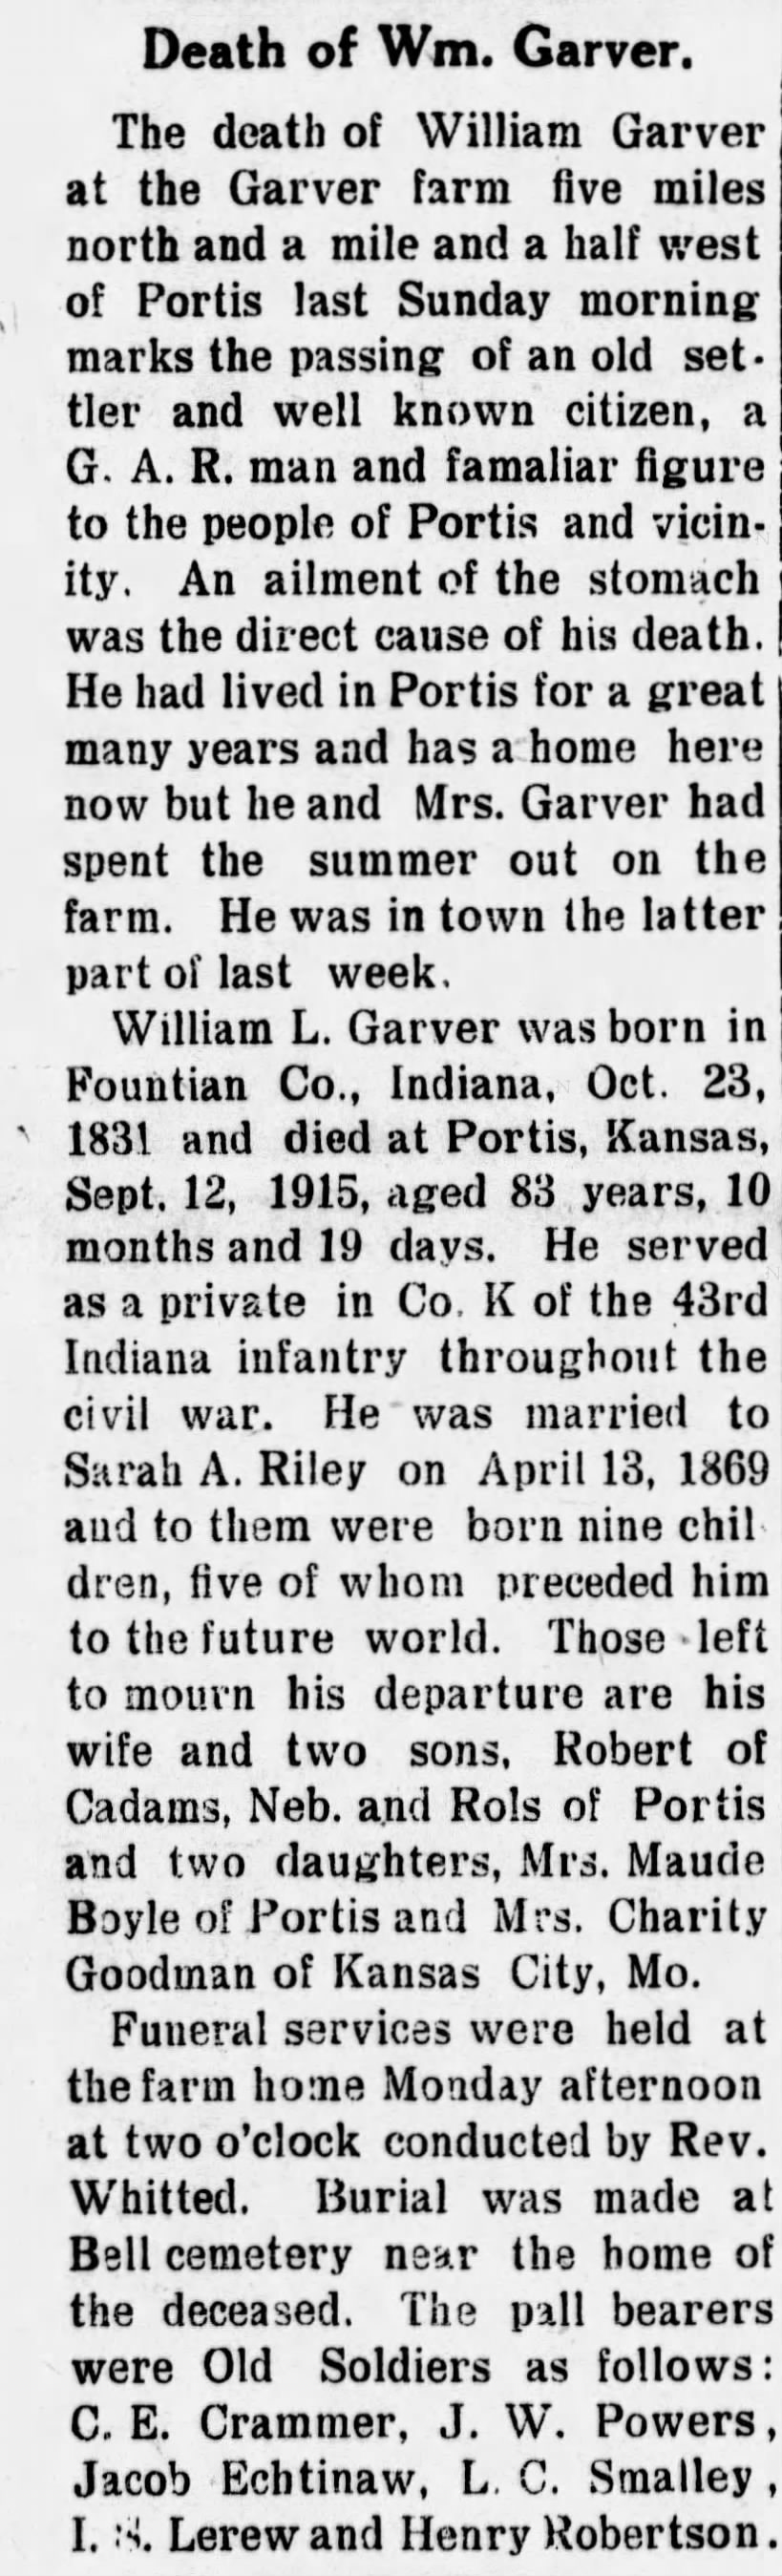 Obituary for William L. Garver